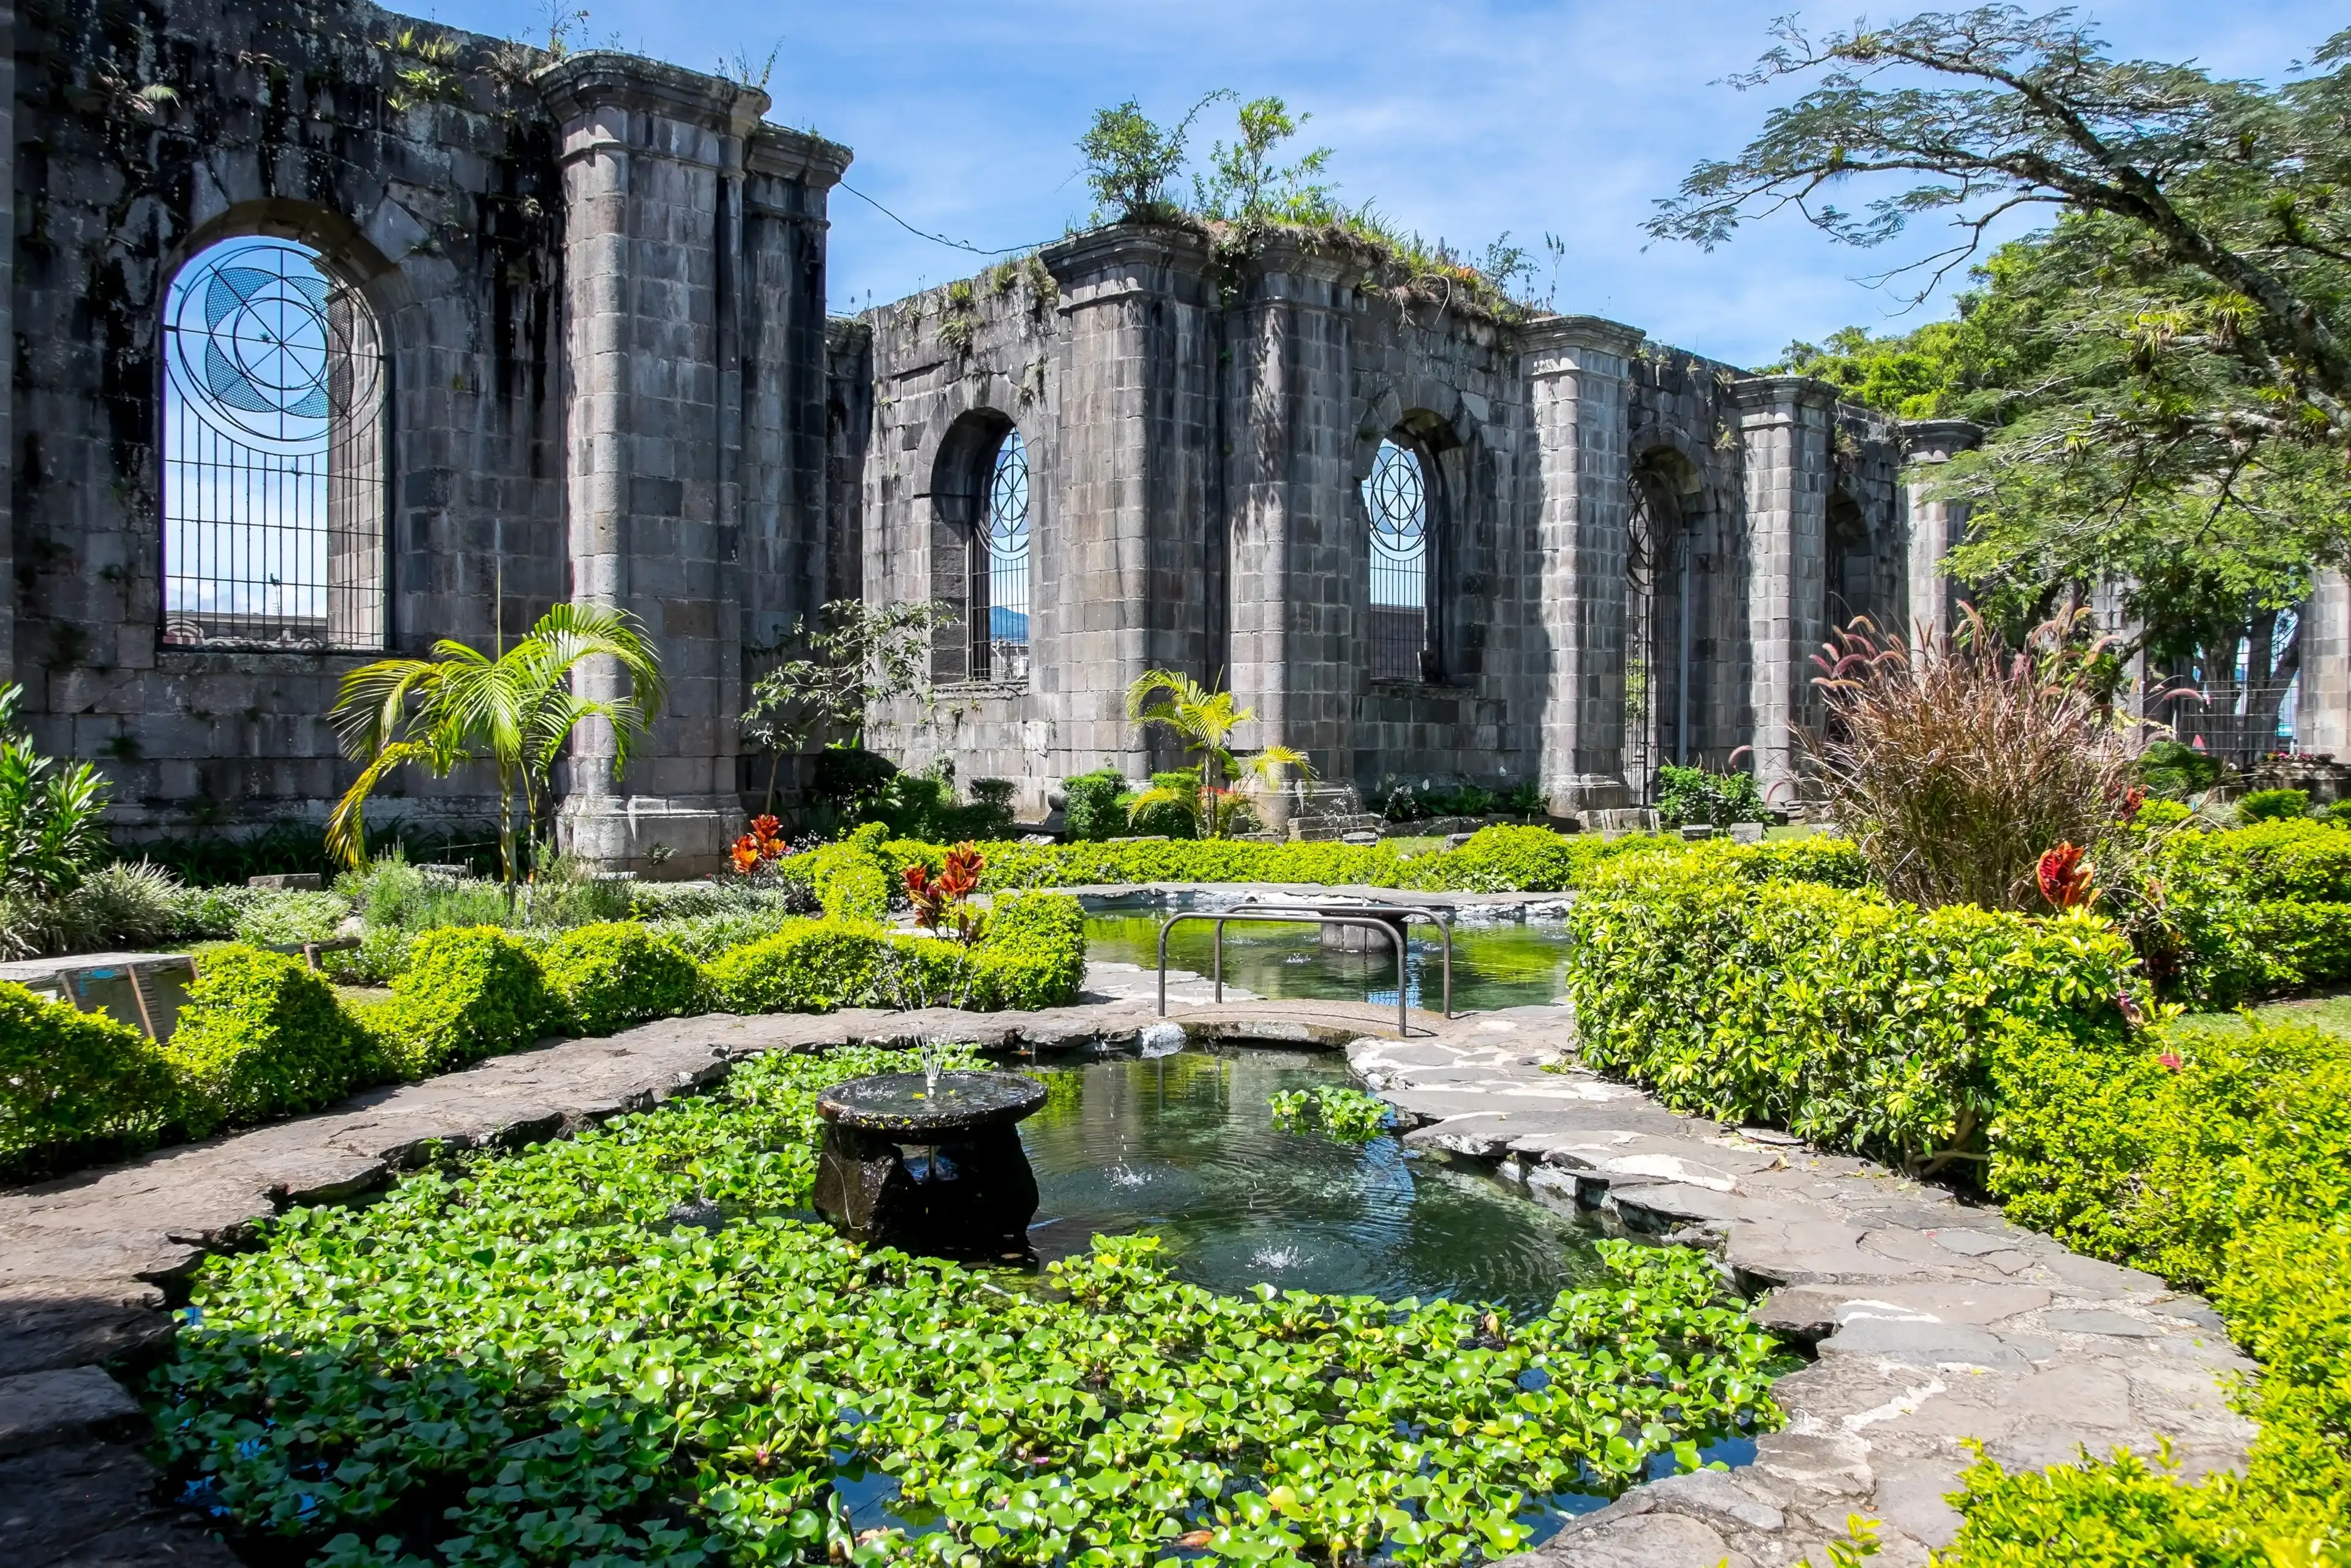 Cartago, Costa Rica - September 16, 2022: Gardens and ruins of a Romanesque church in the urban center of the city